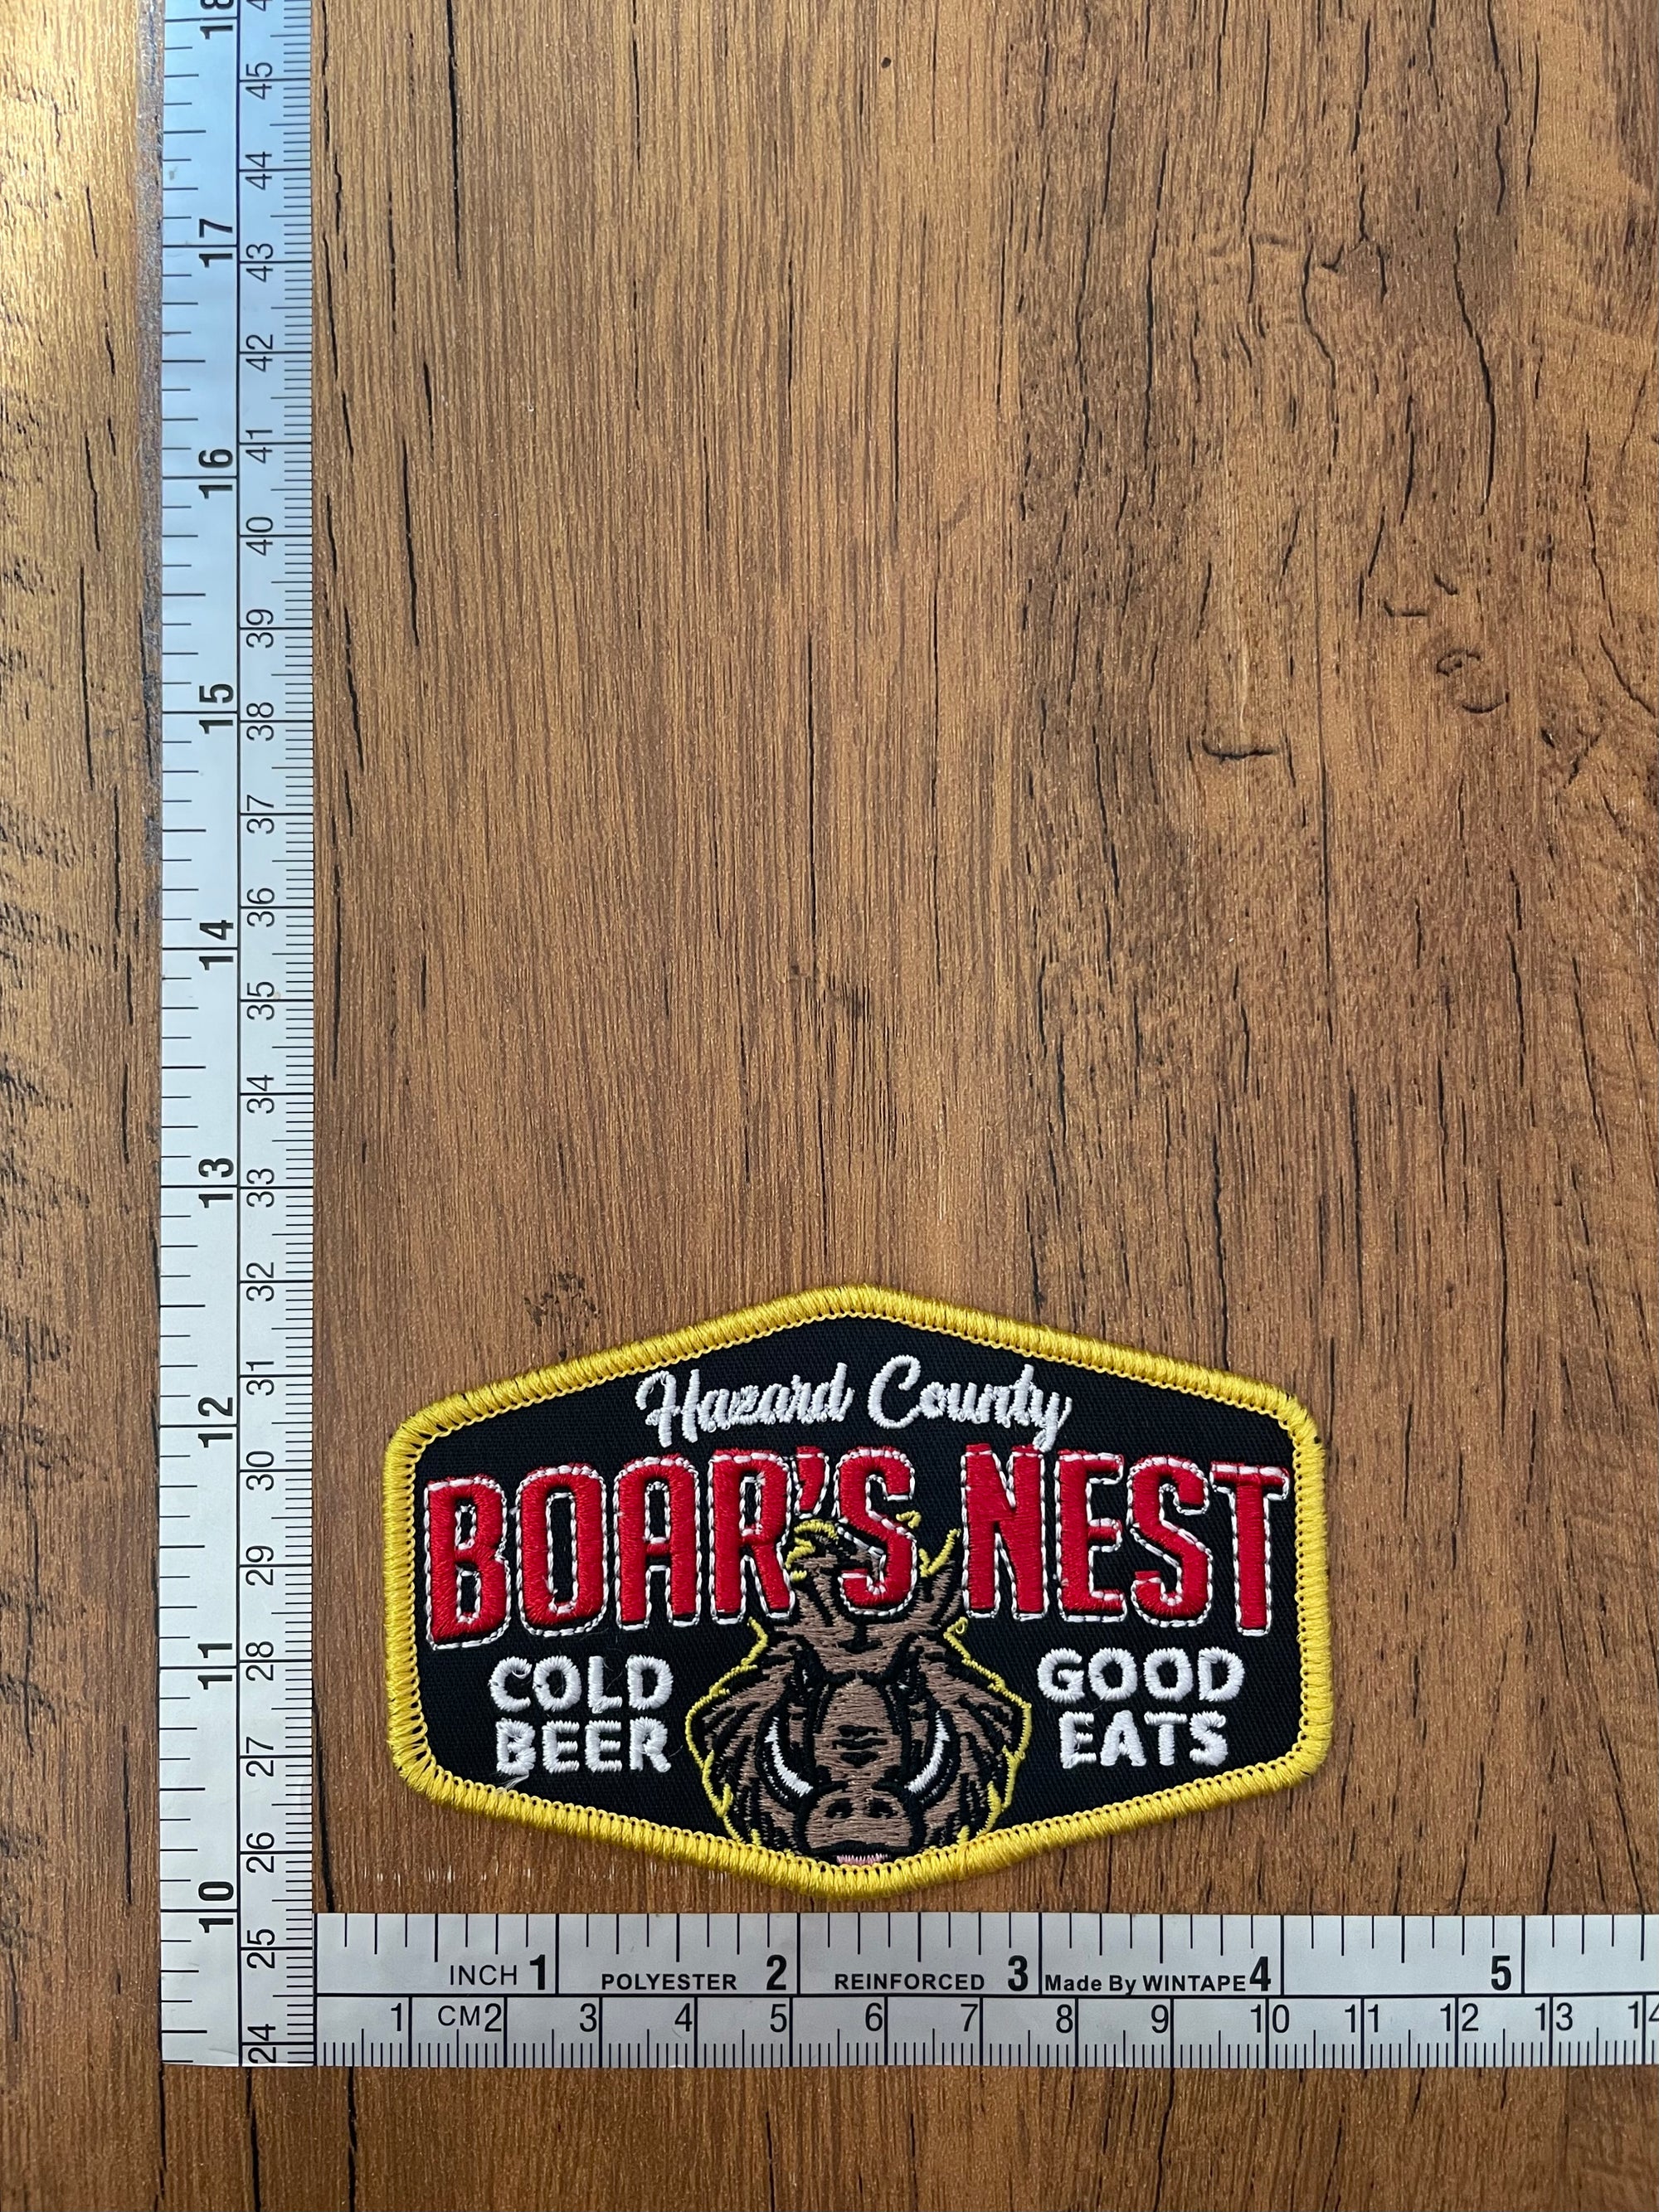 Board’s Nest- Cold Beer, Good Eats